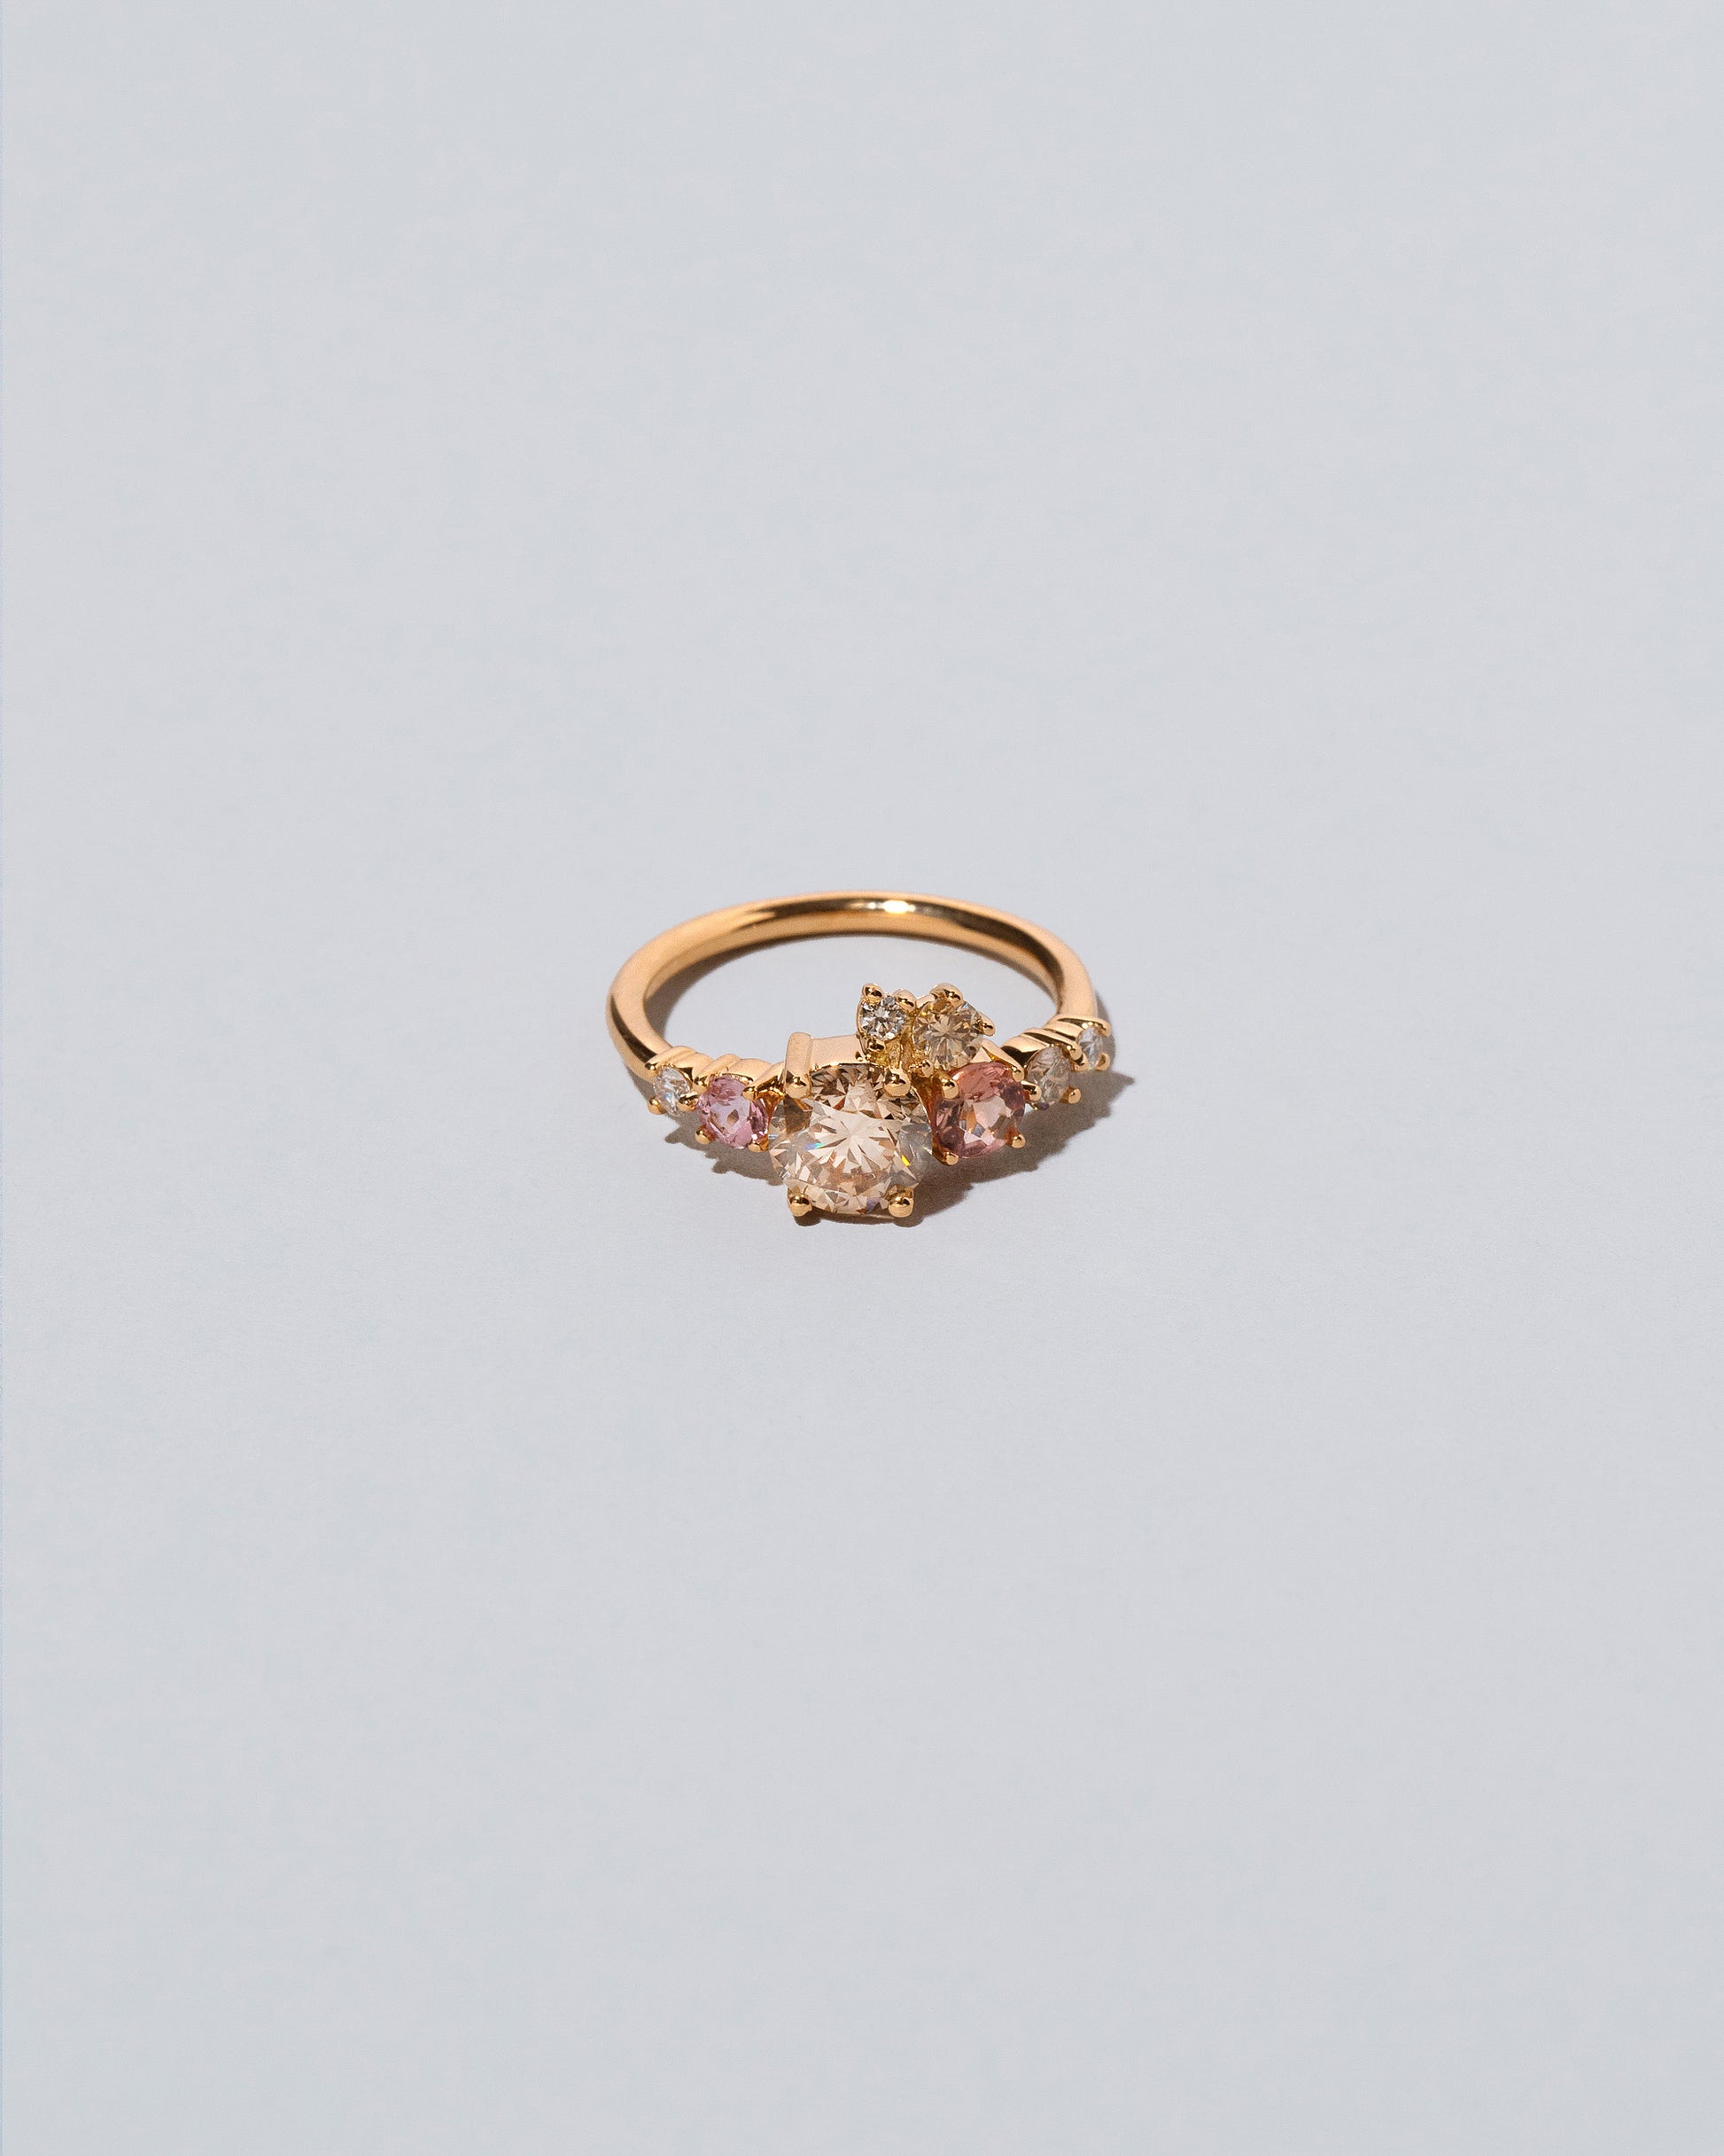 Luna Ring - Champagne Diamond on light color background.